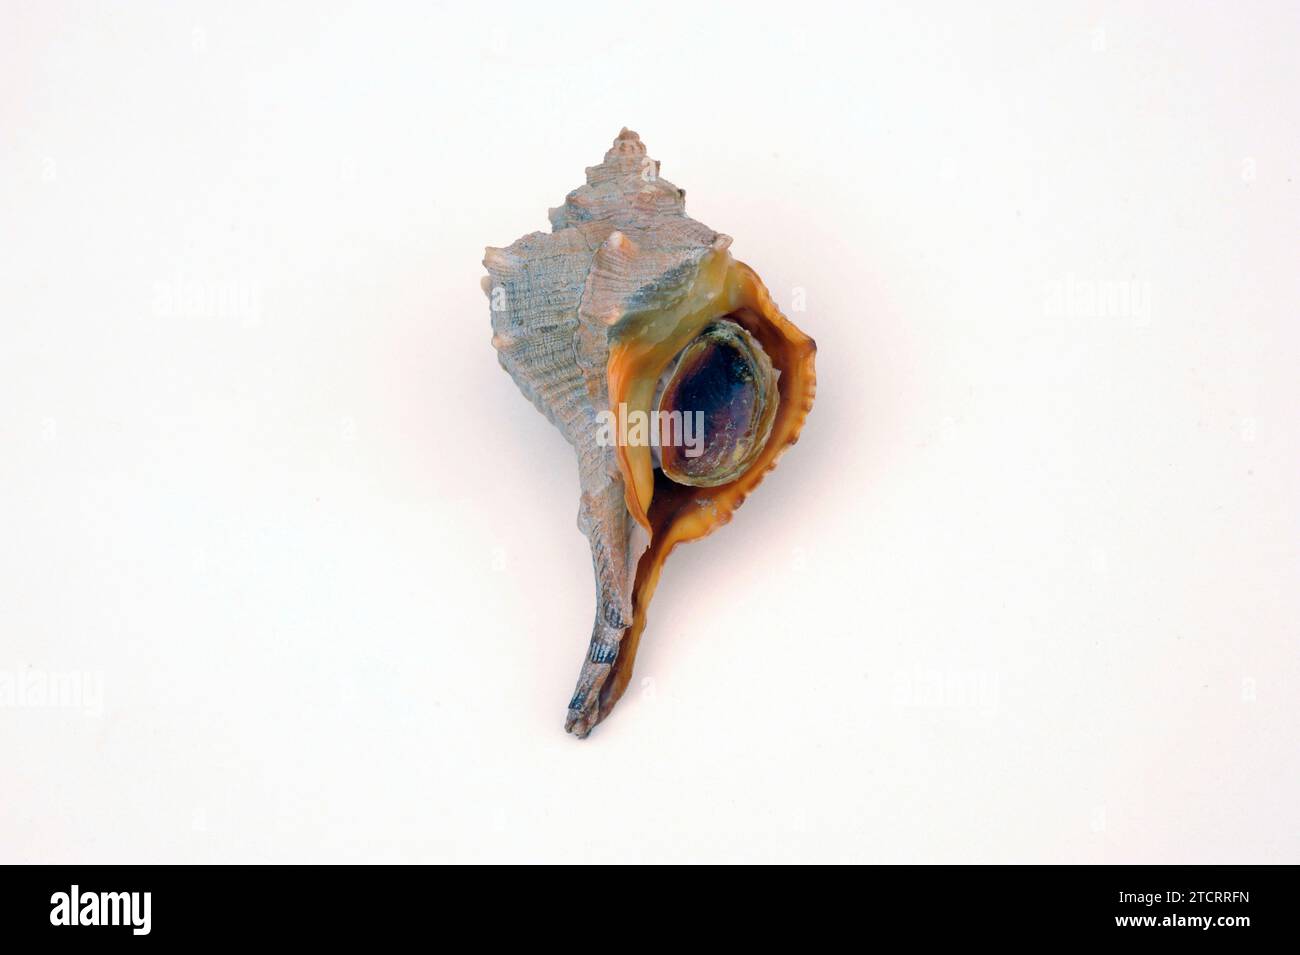 Purple dye murex (Bolinus brandaris, Haustellum brandaris or Murex brandaris) is an edible marine snail. Provides a dye named Tyrian purple. Stock Photo